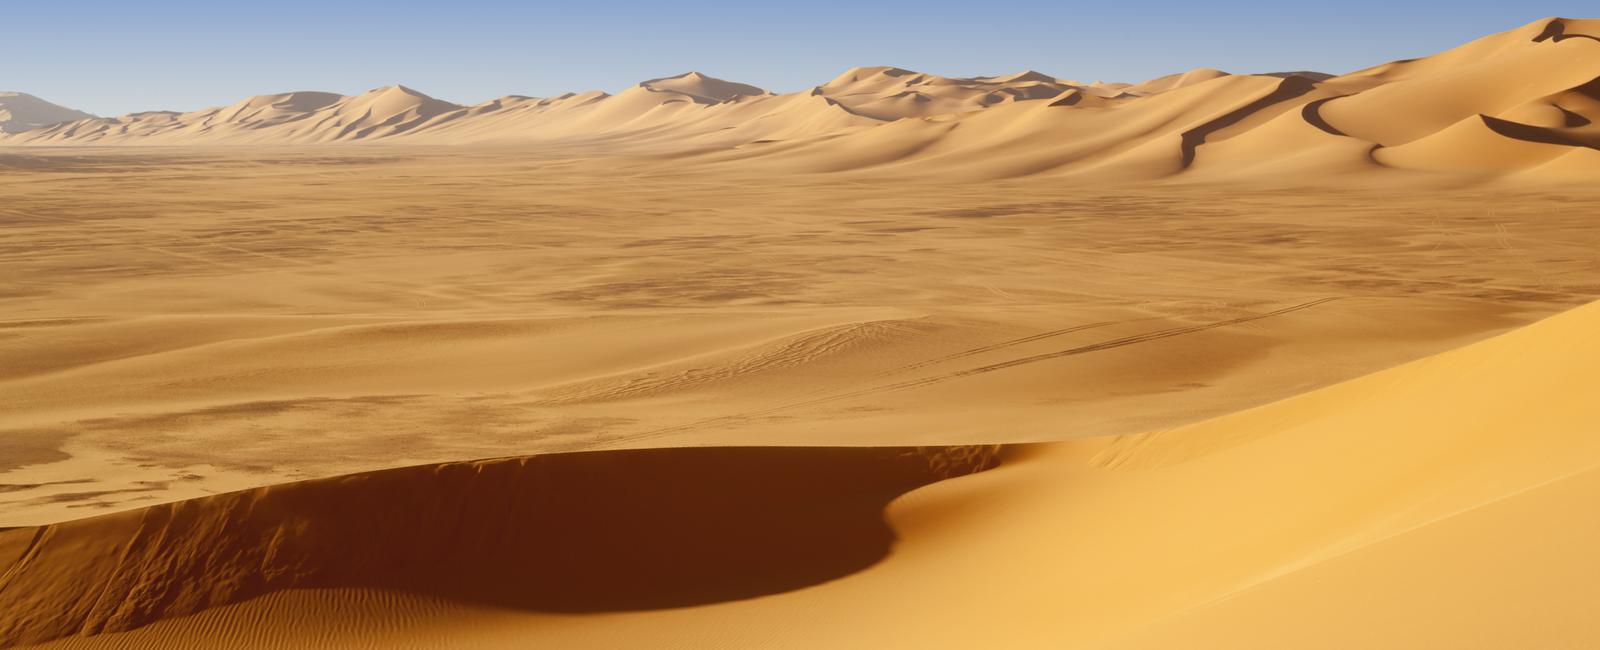 Only a quarter of the sahara desert is sandy